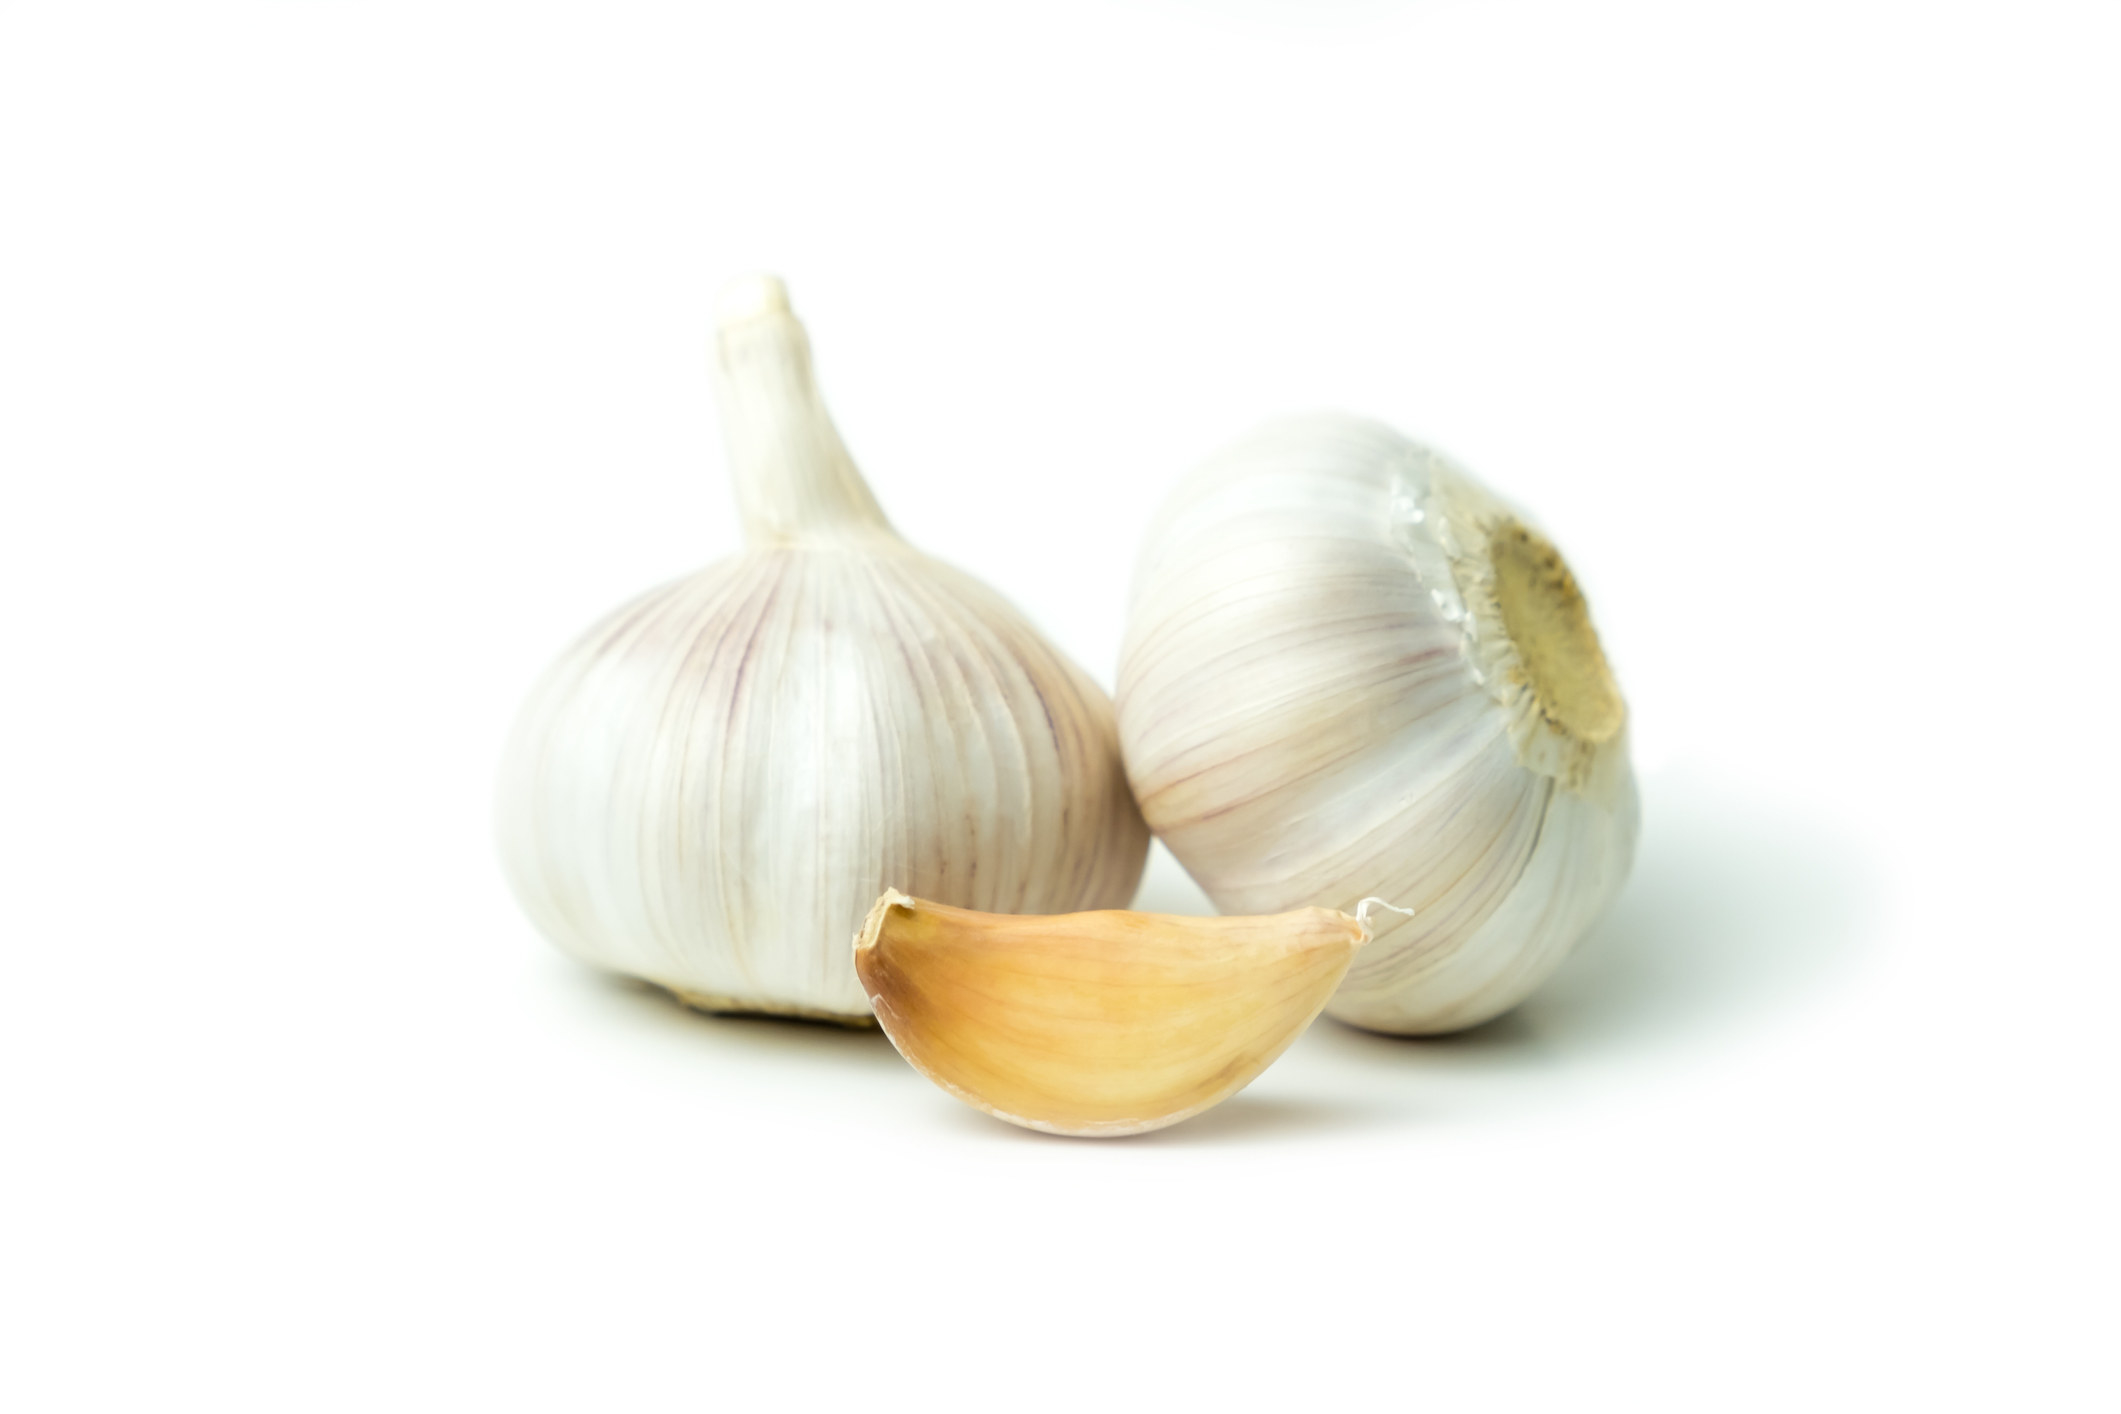 Garlic bulbs and a clove